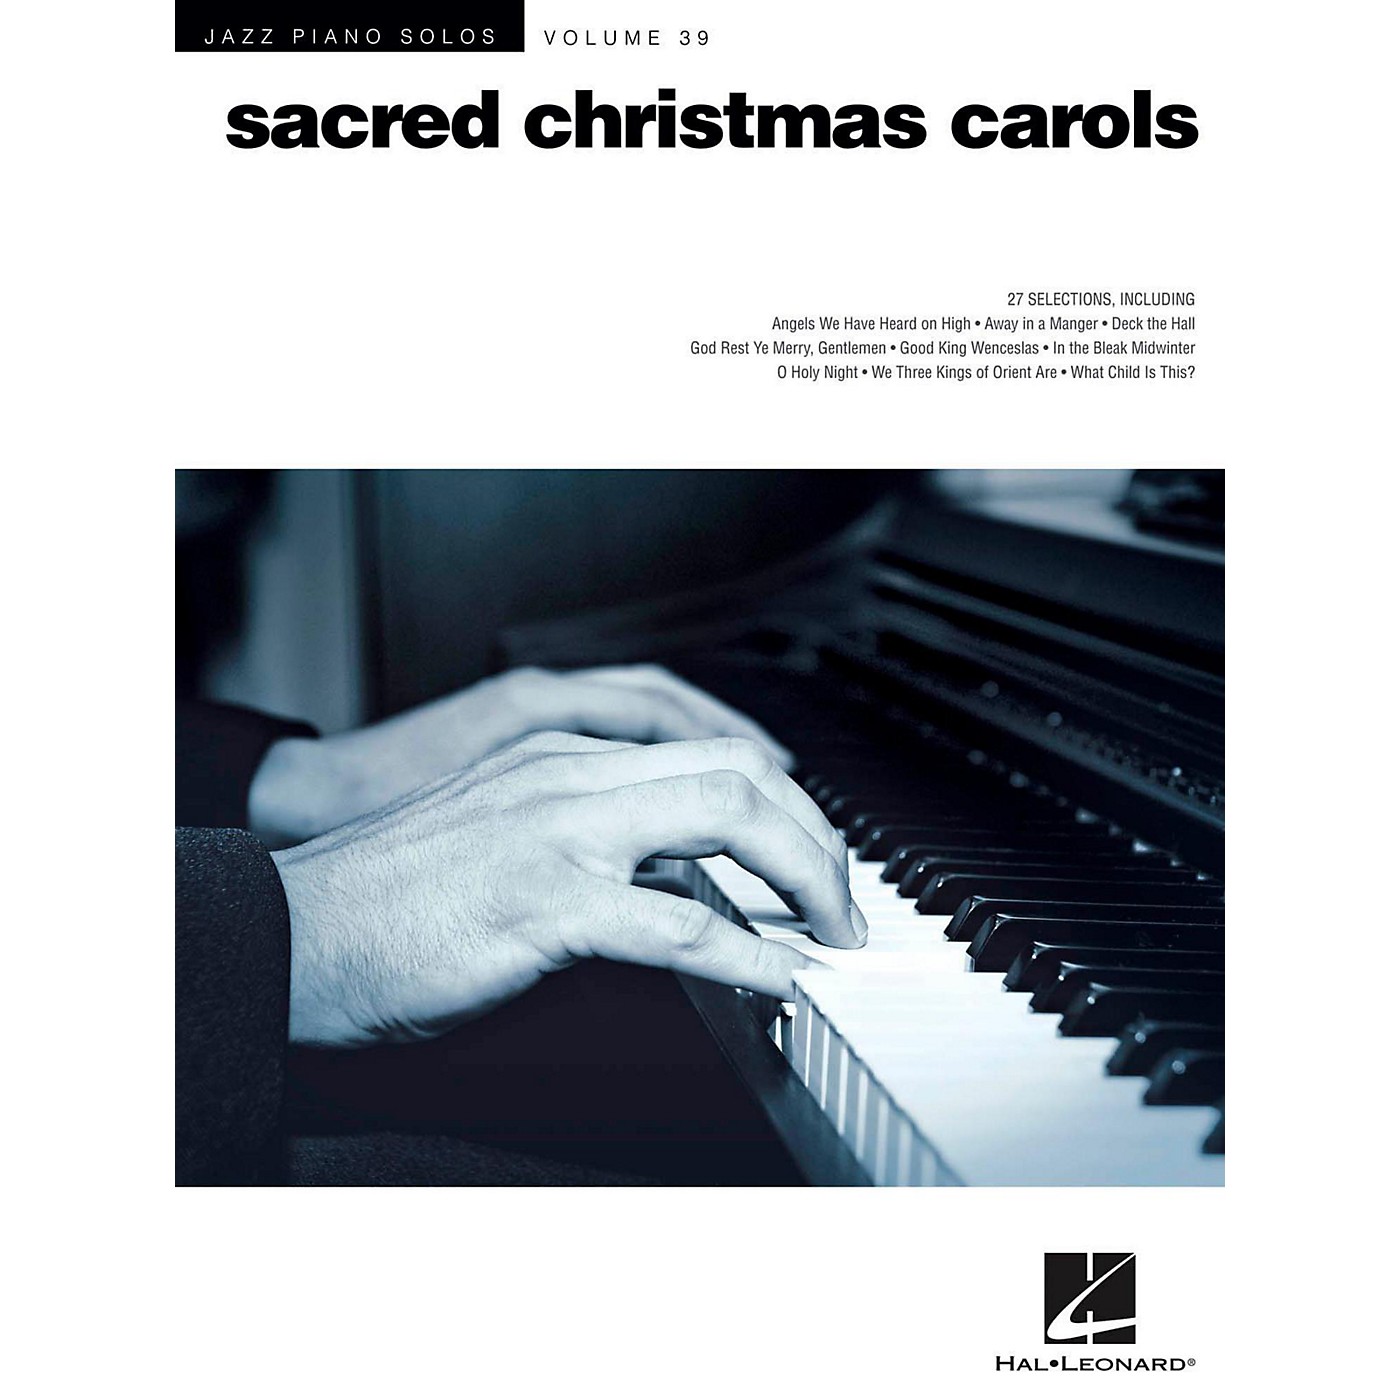 Hal Leonard Sacred Christmas Carols - Jazz Piano Solo Series Vol. 39 thumbnail